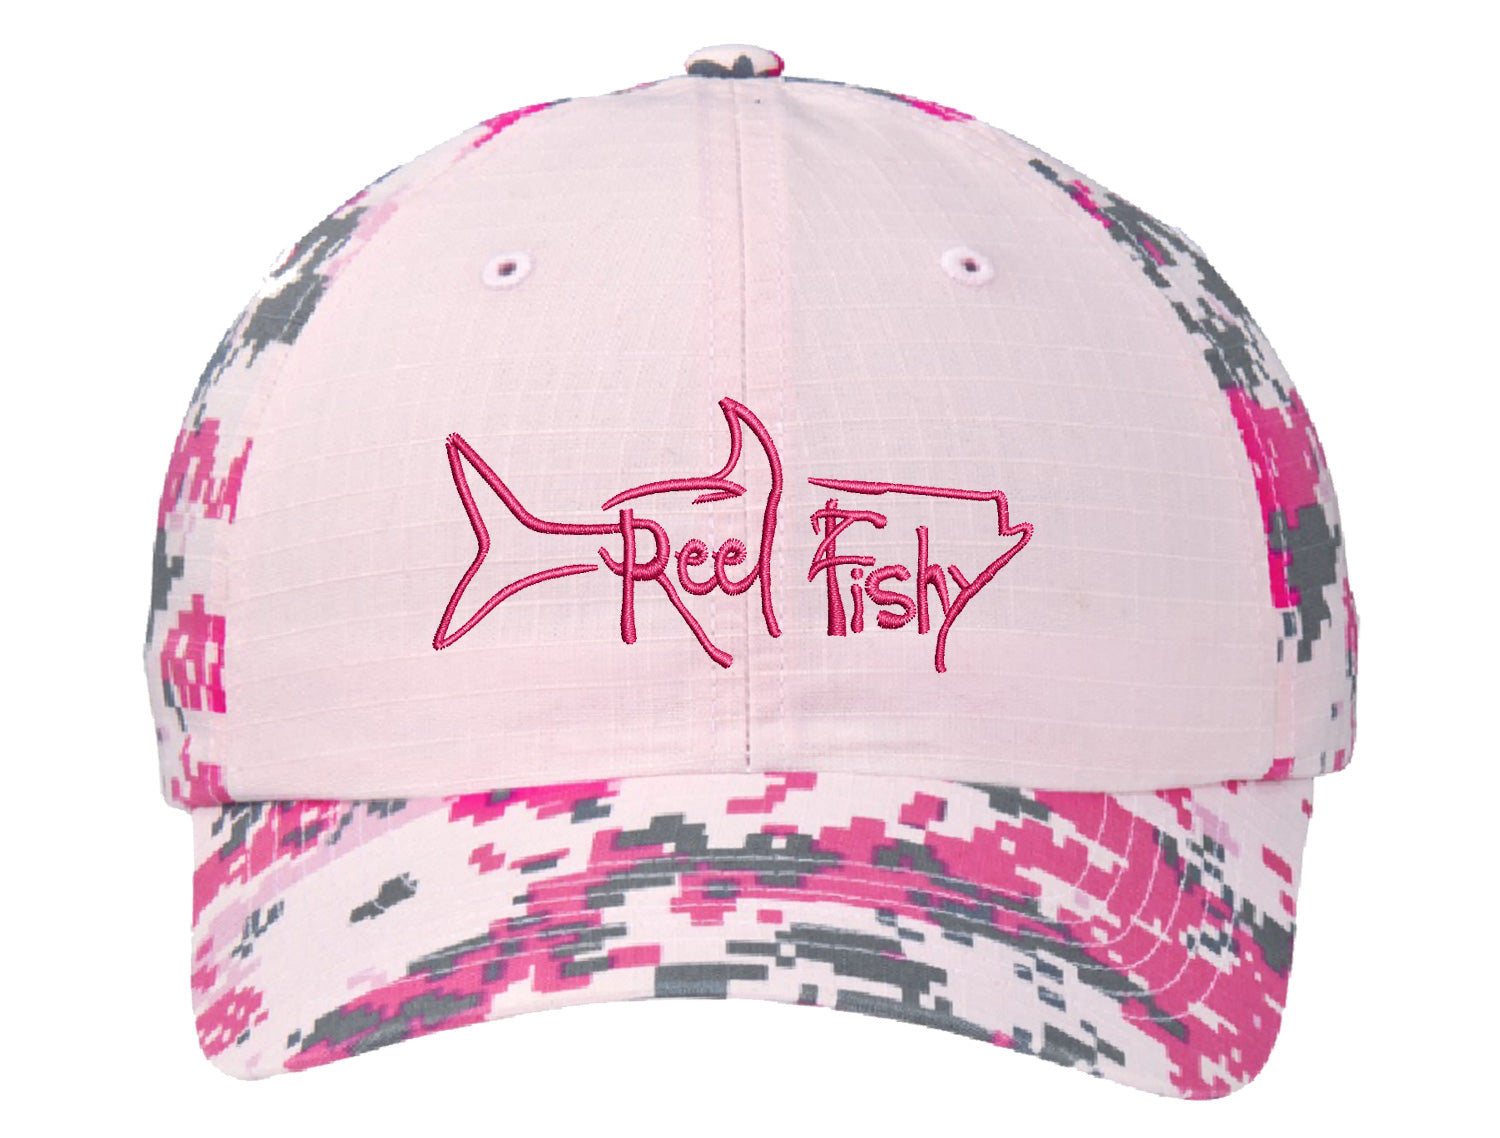 Tarpon Fishing Hats, Baseball Cap, Dad Hat, Camo Hat - *8 Colors! Tan Camo - Brown Logo